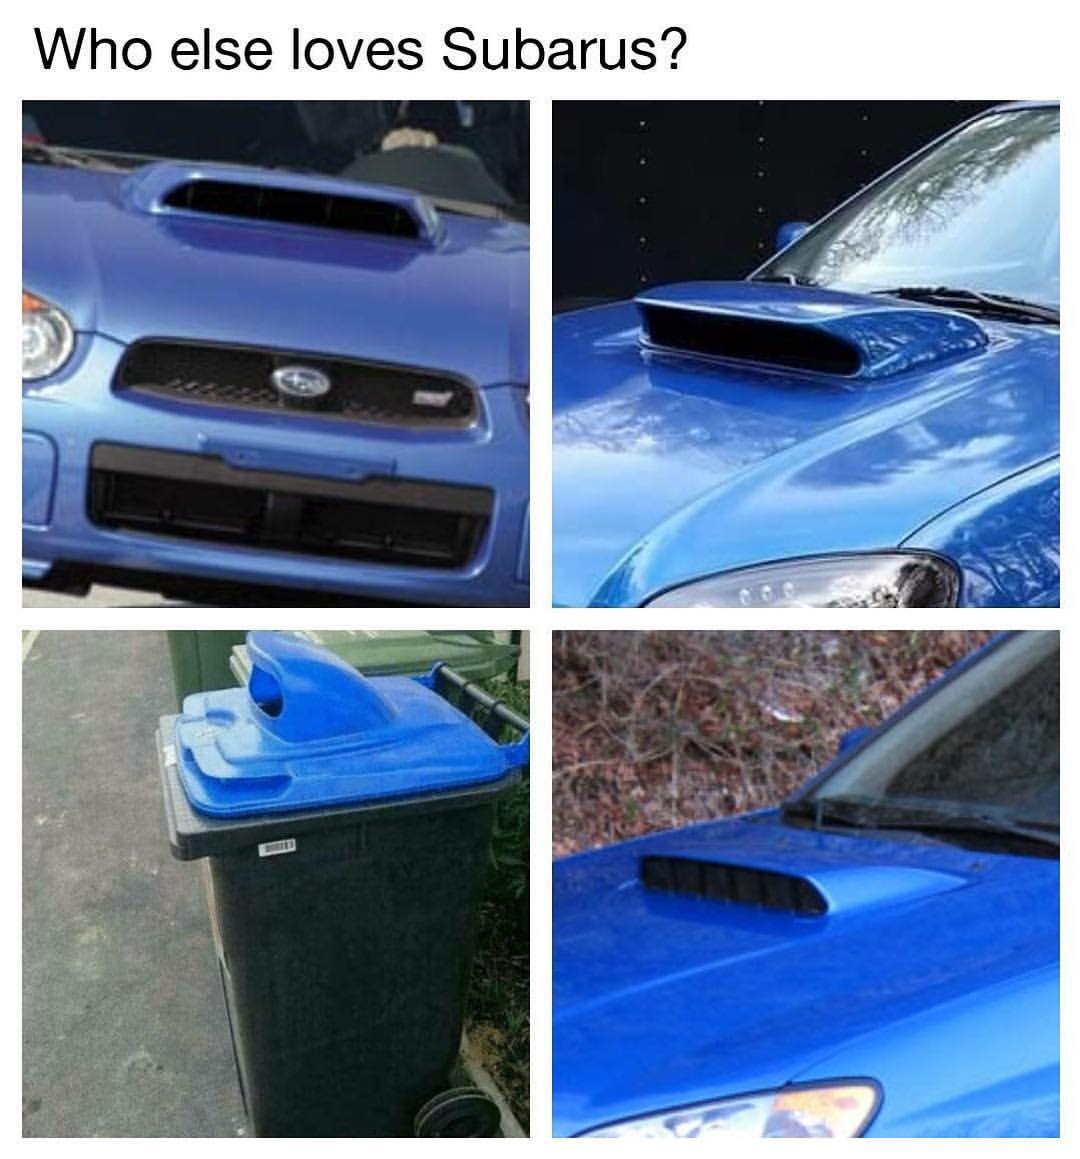 Who else loves Subarus?